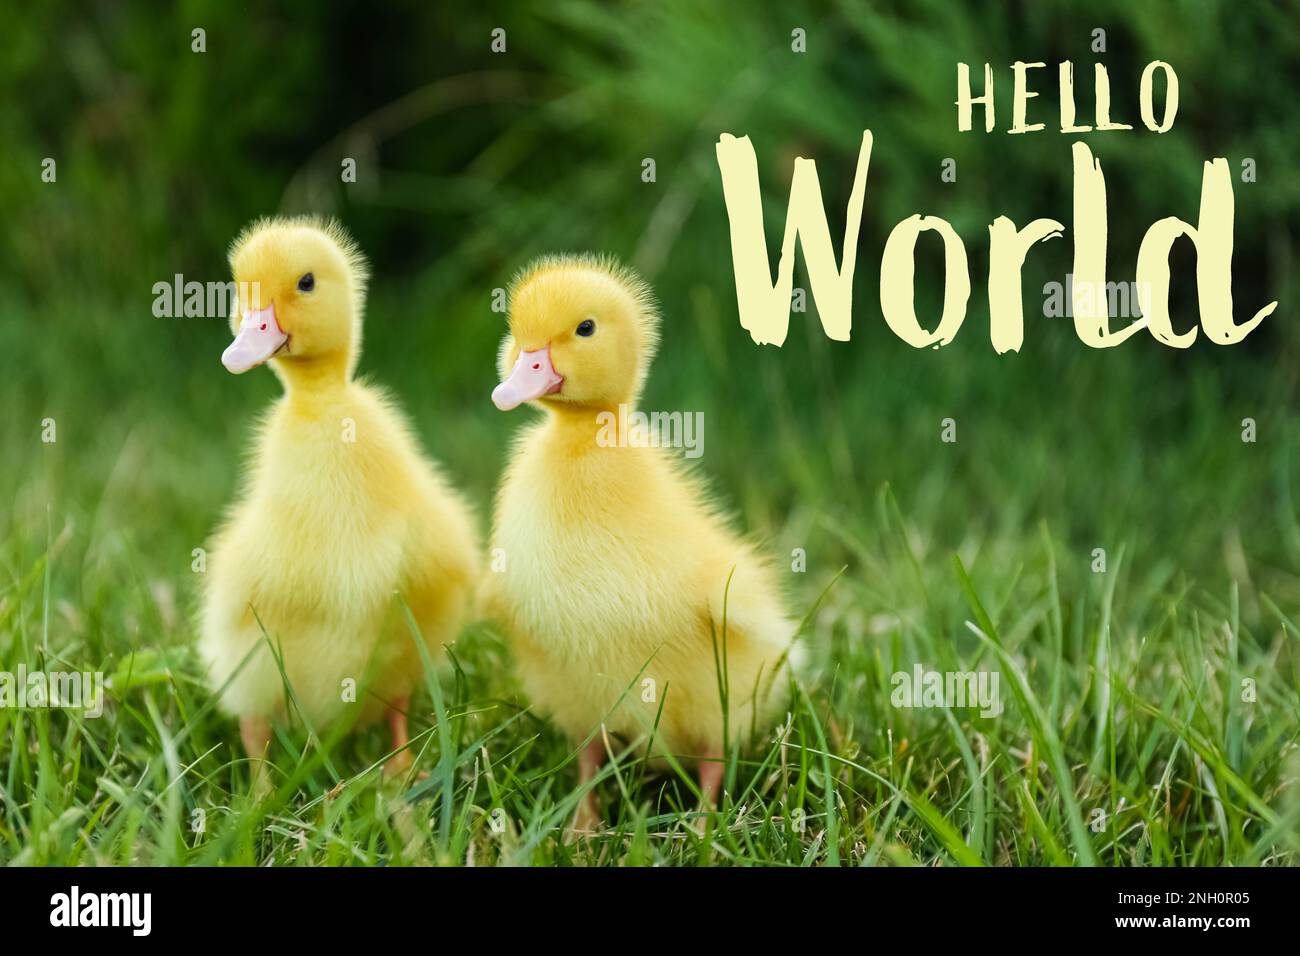 Hello World. Cute fluffy goslings on green grass Stock Photo